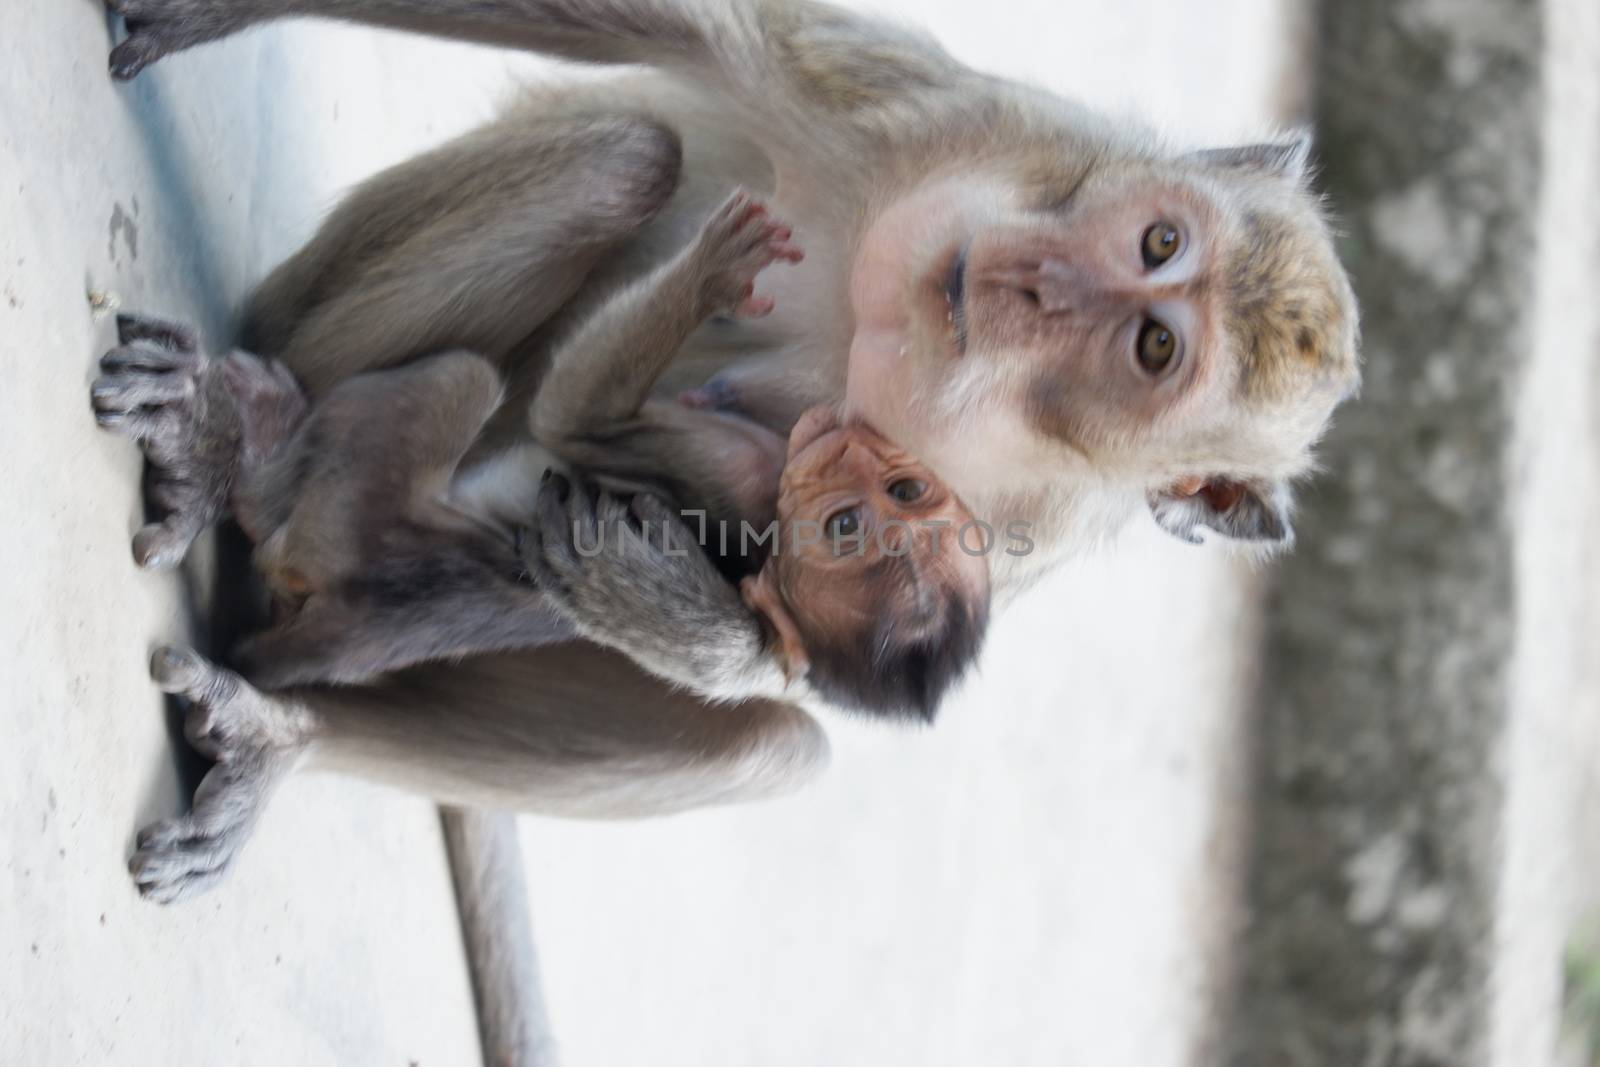 Macaca fascicularis (long-tailed macaque)Macaca fascicularis by pengejarsenja